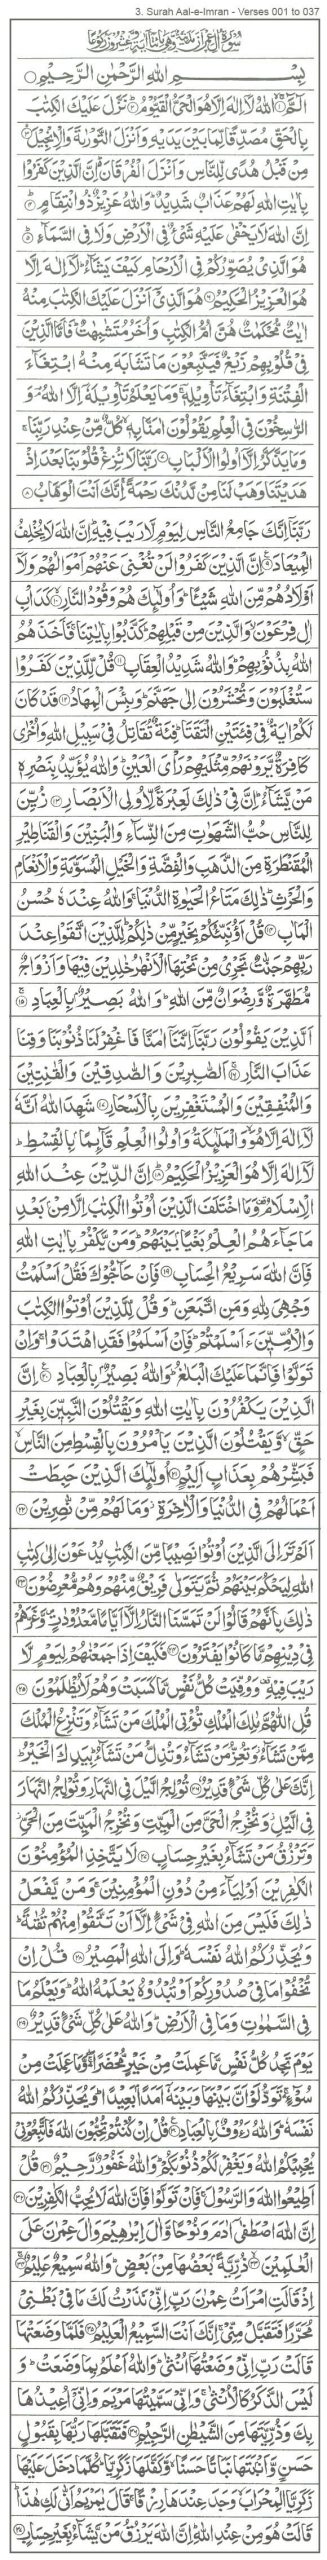 3 Surah Aal-e-Imran - Verses 001 to 037